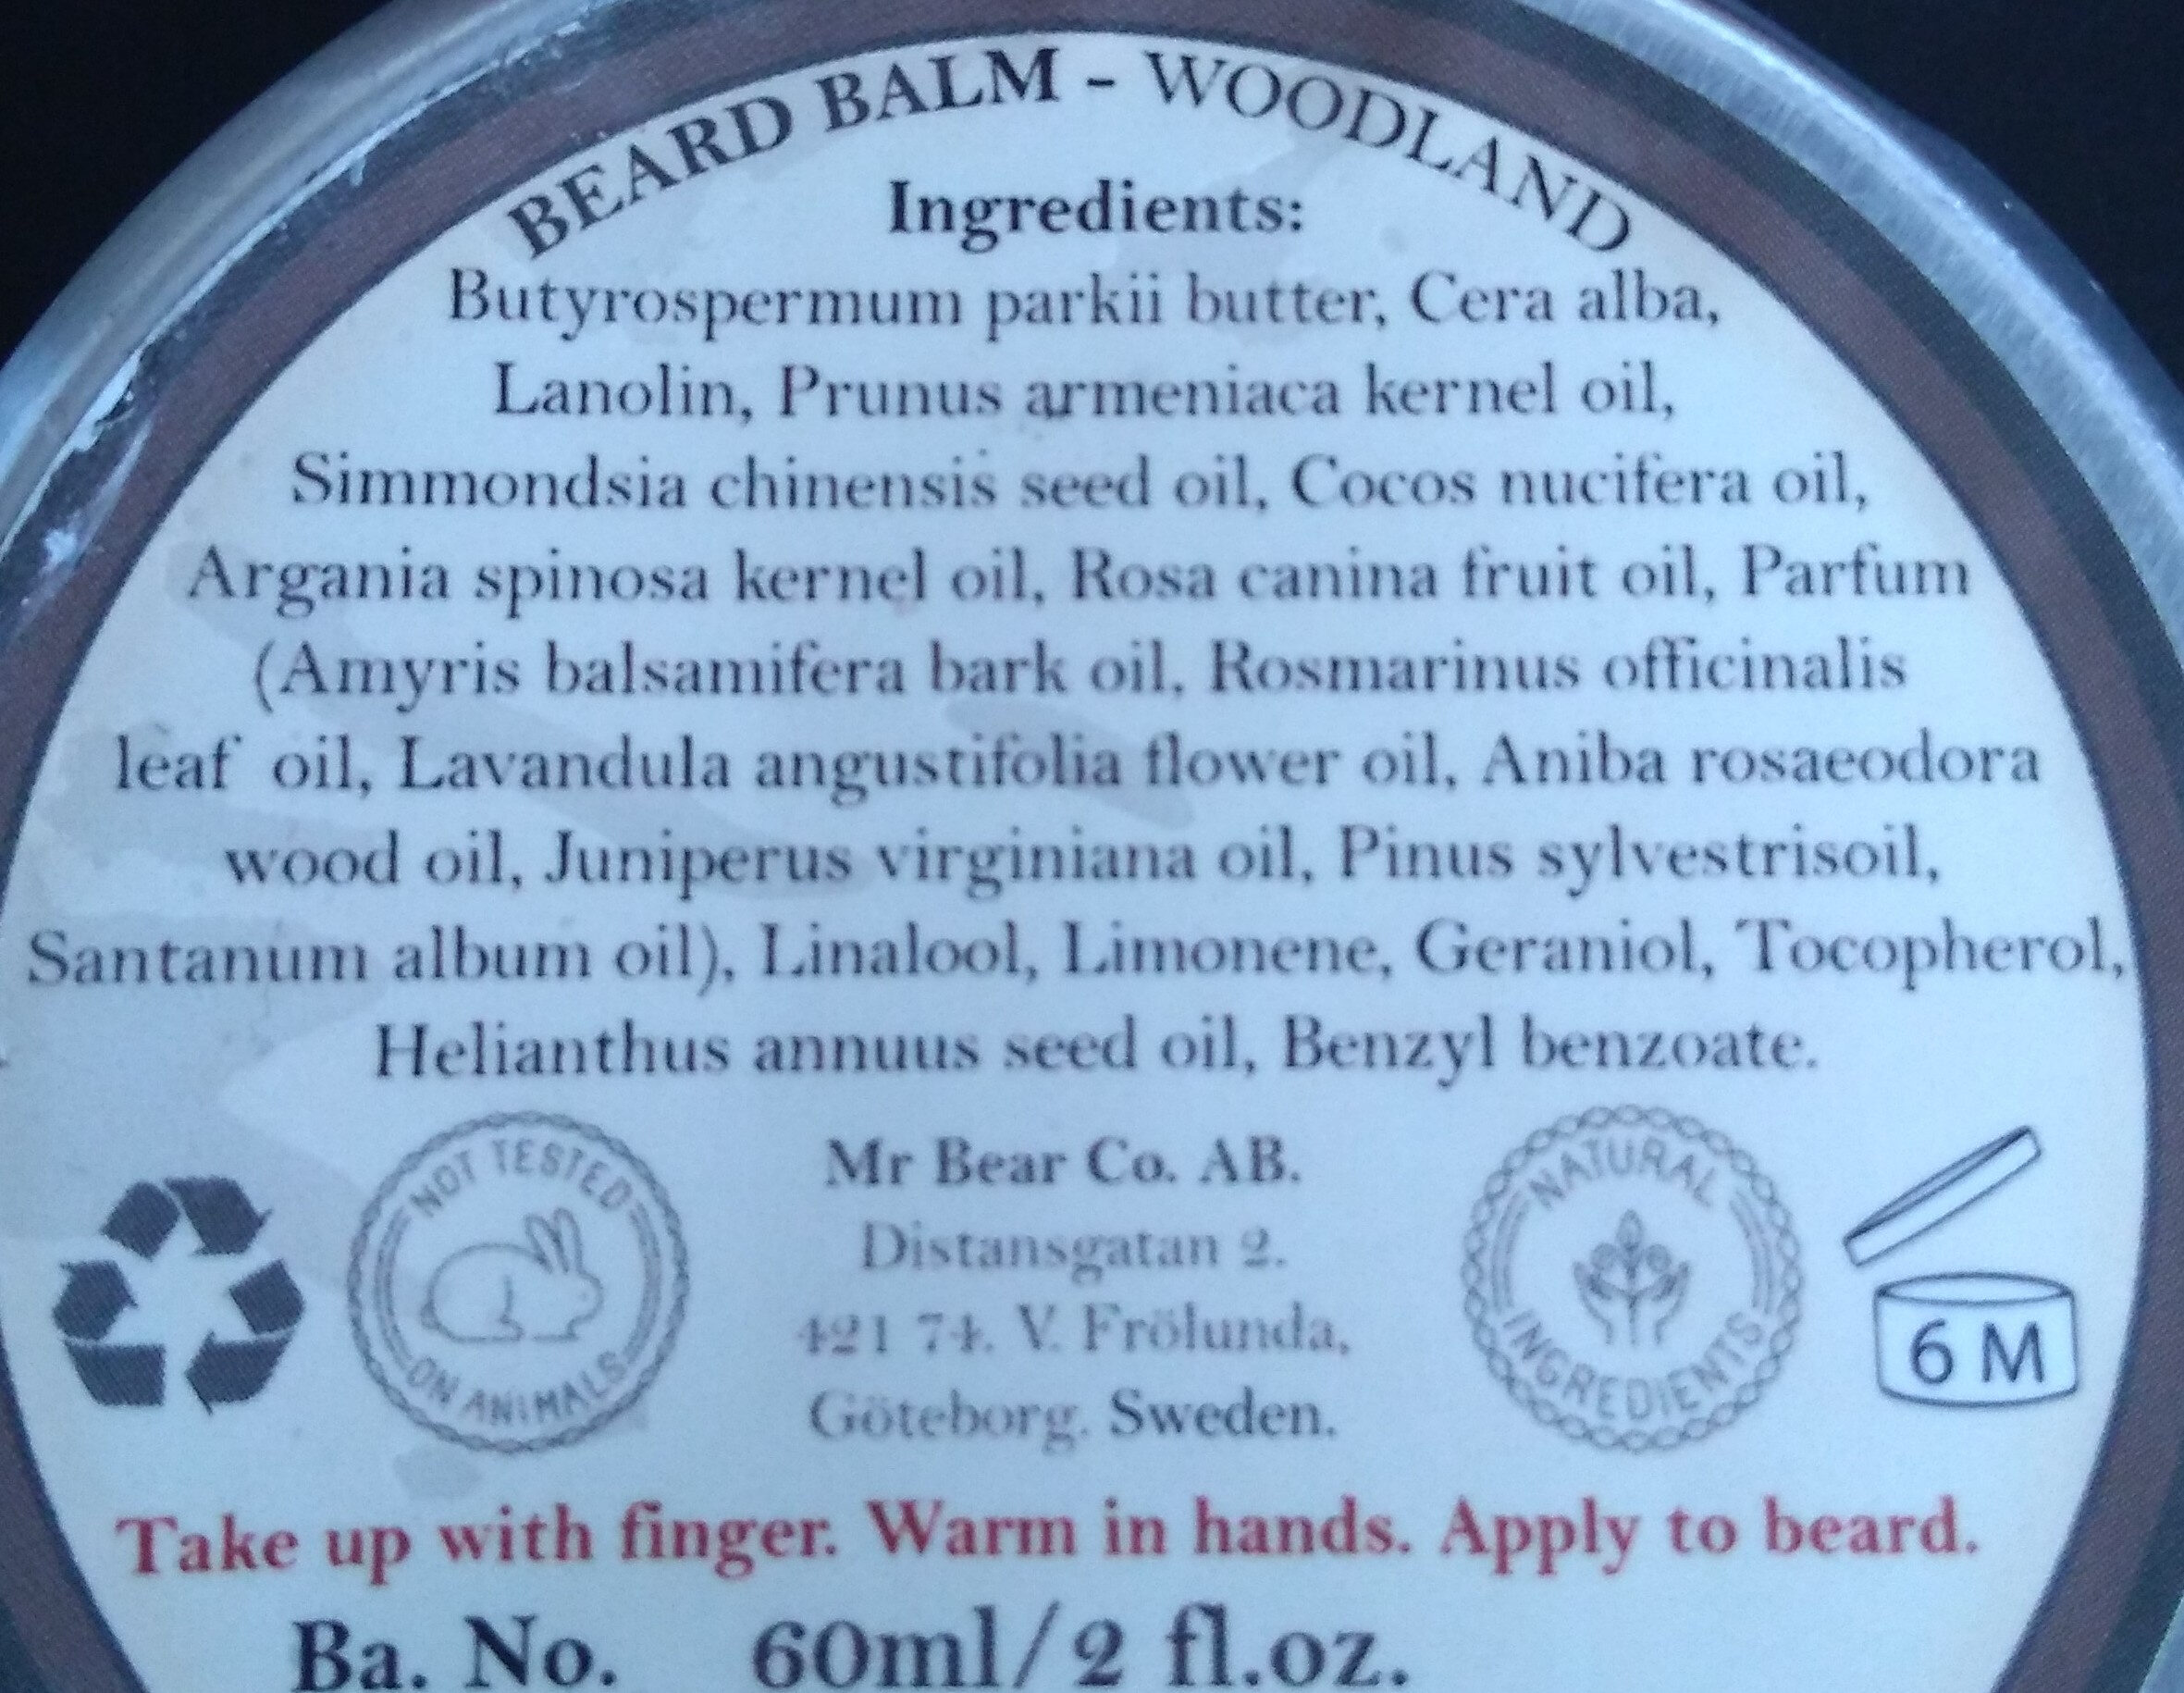 Beard Balm - Woodland - Ingredients - en